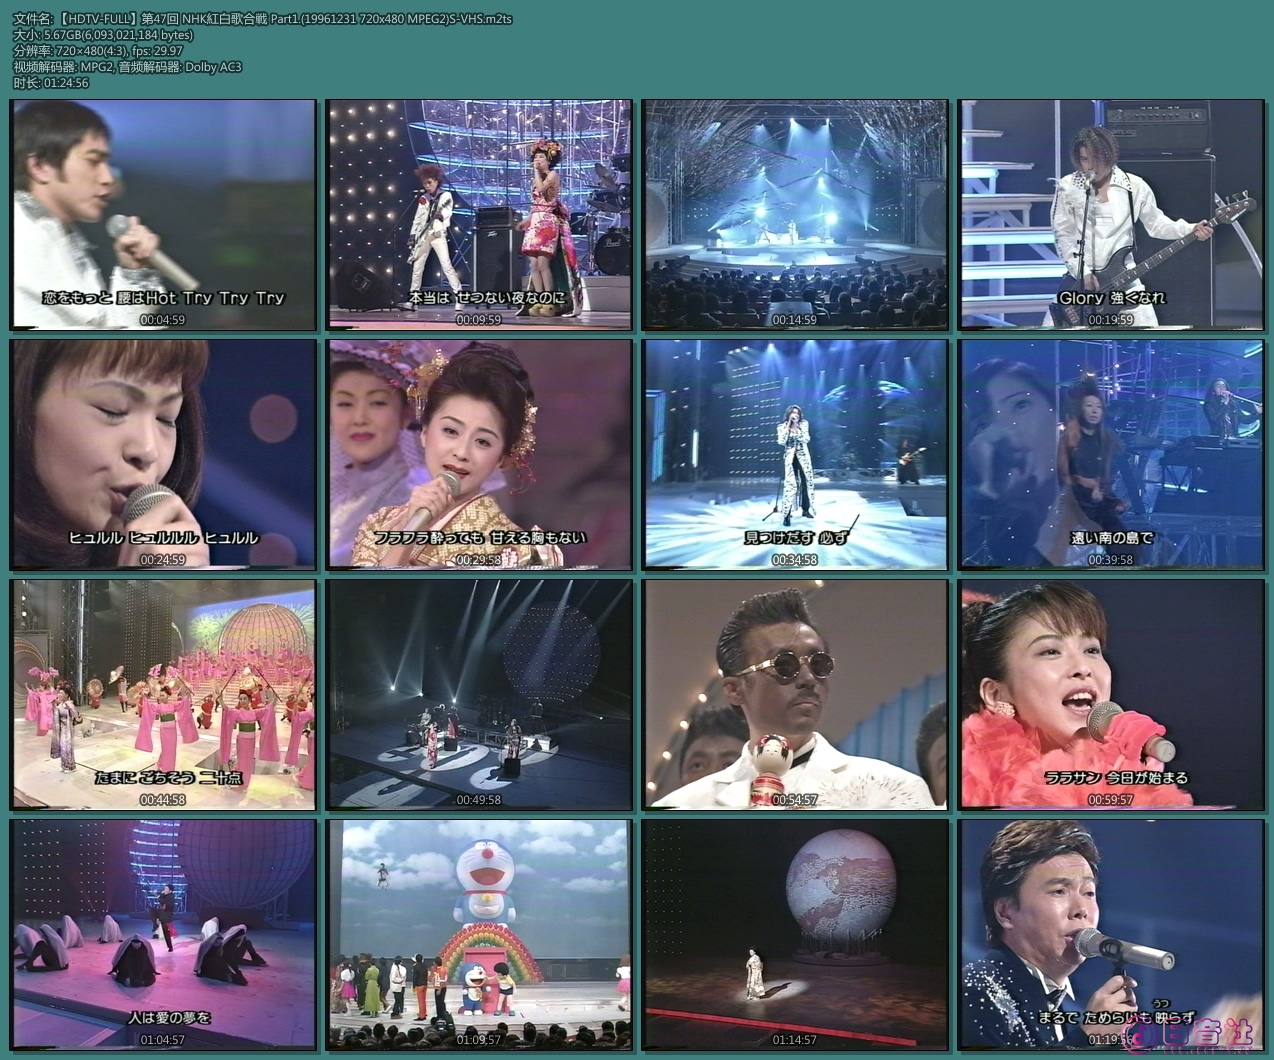 【HDTV-FULL】第47回 NHK紅白歌合戦 Part1.(19961231 720x480 MPEG2)S-VHS.m2ts.jpg